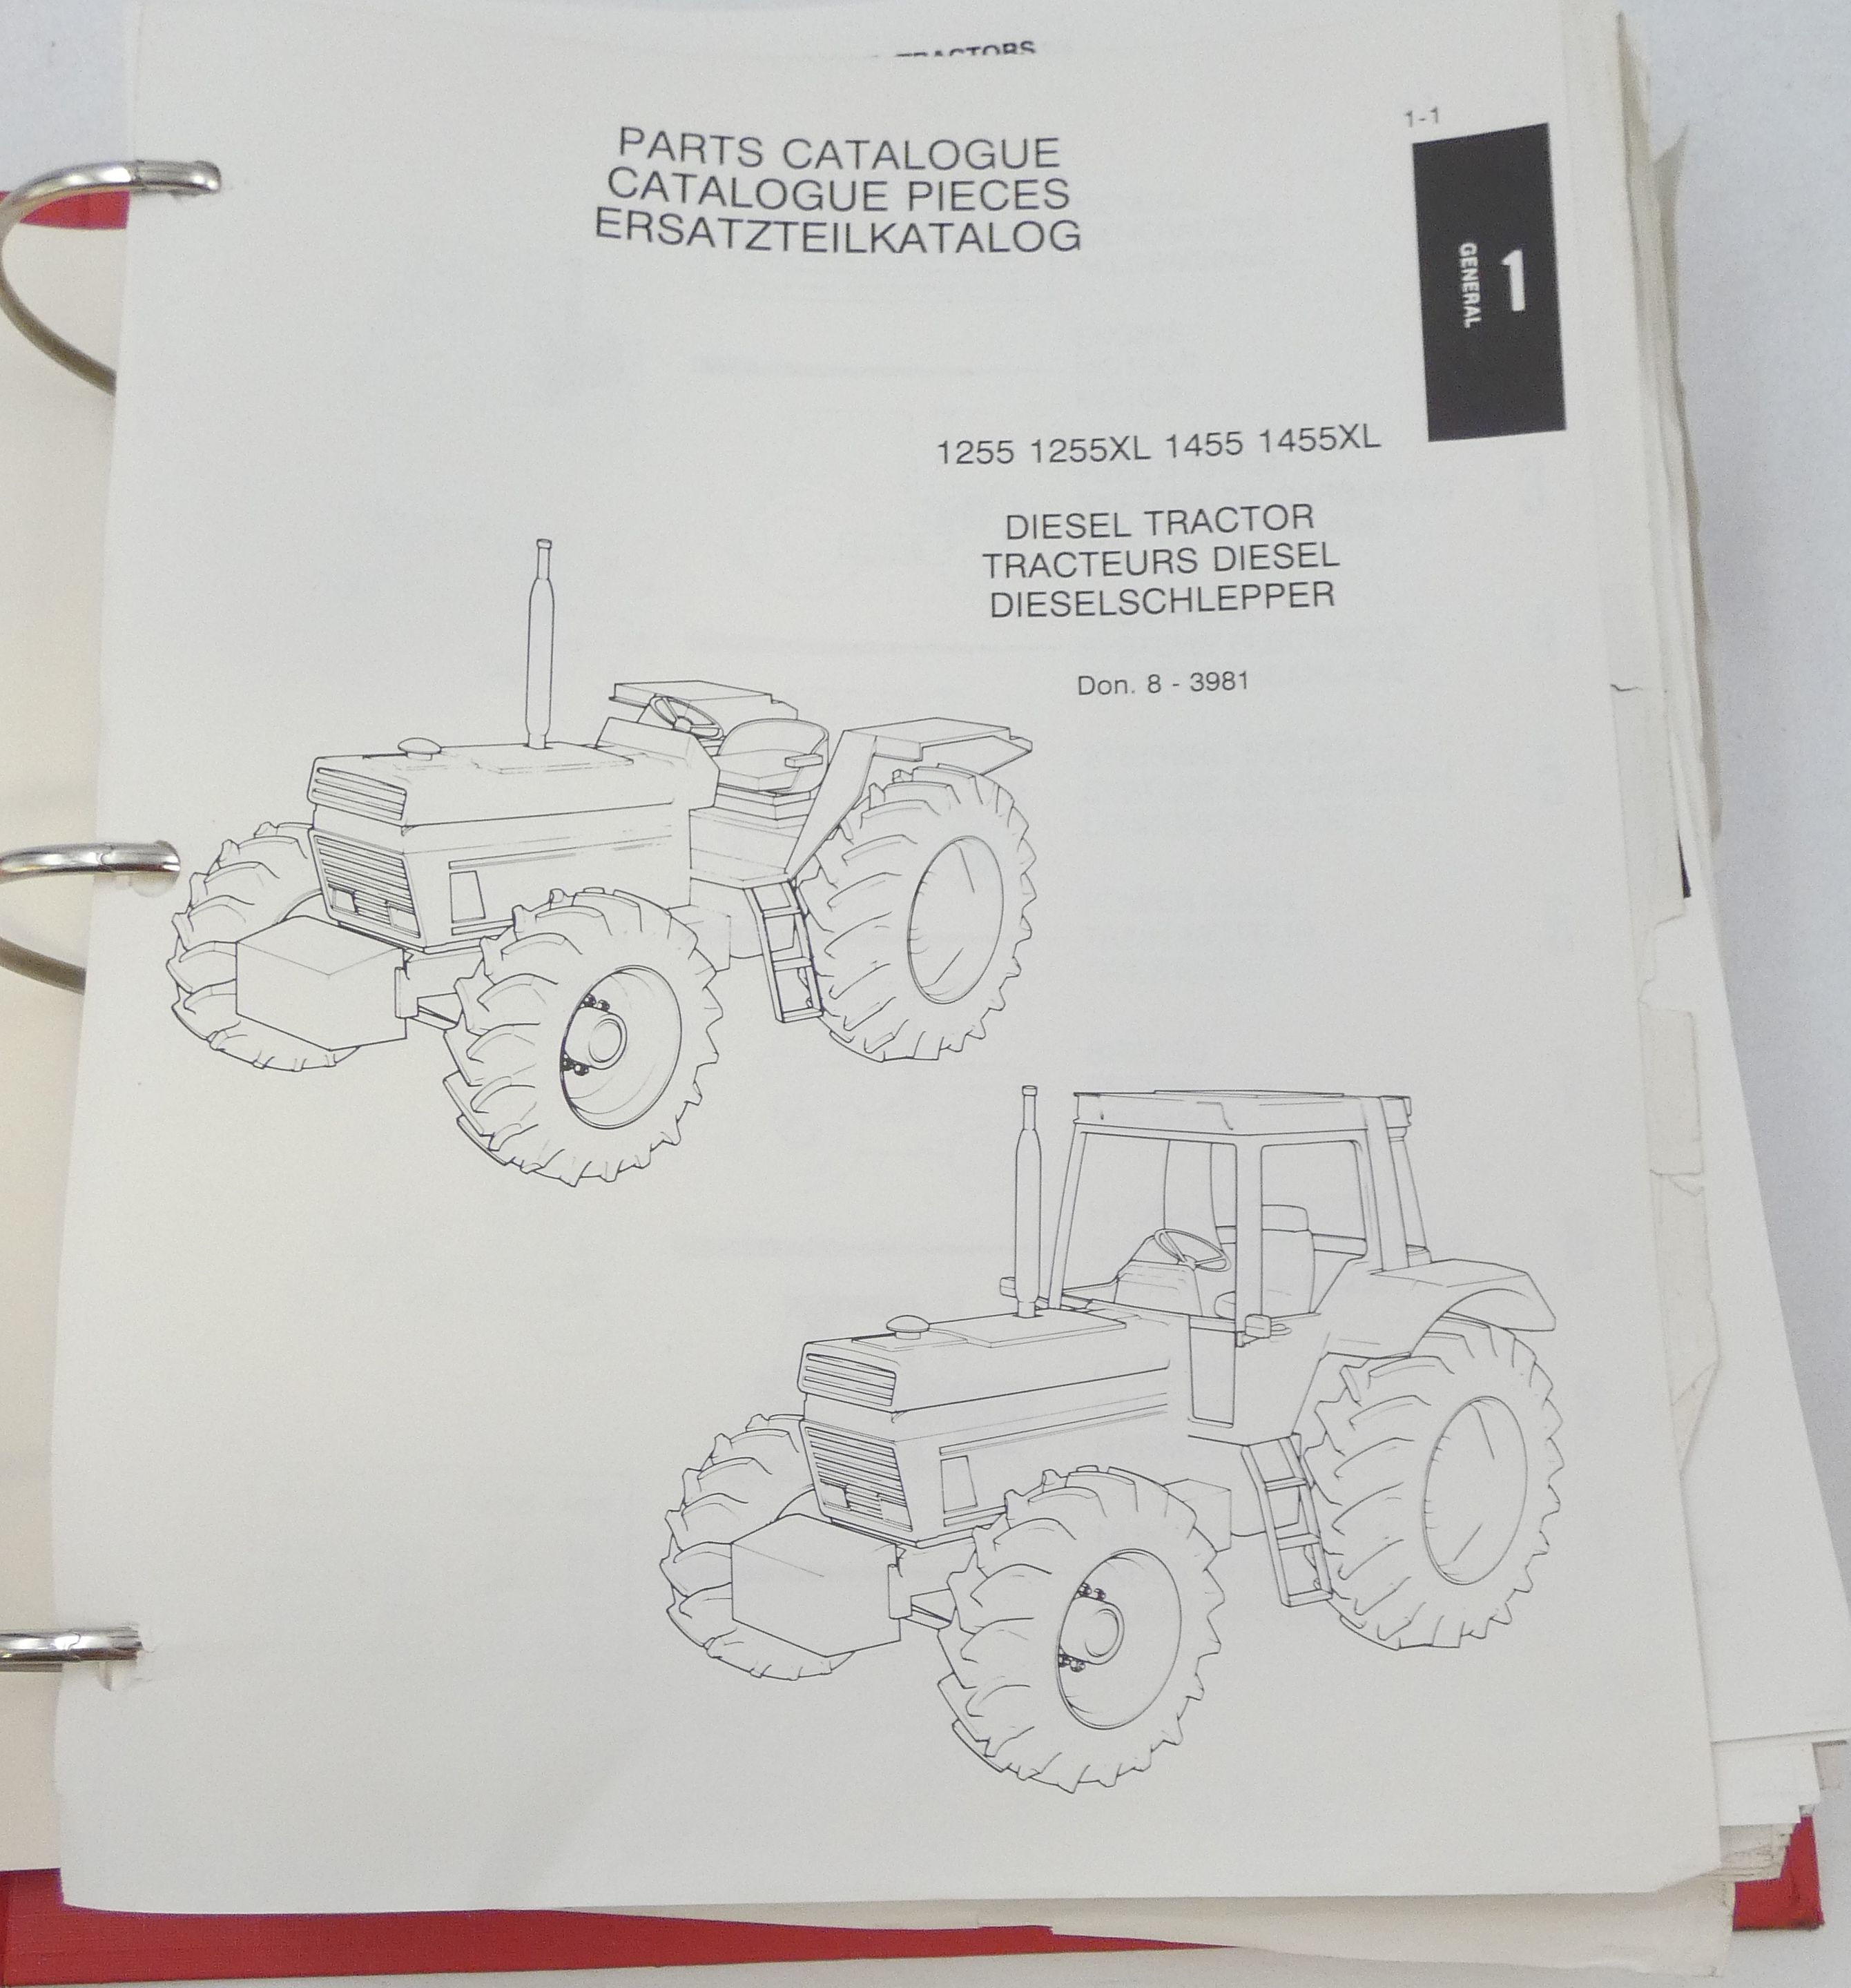 CaseIH 1255, 1255XL, 1455, 1455XL diesel tractor parts catalogue